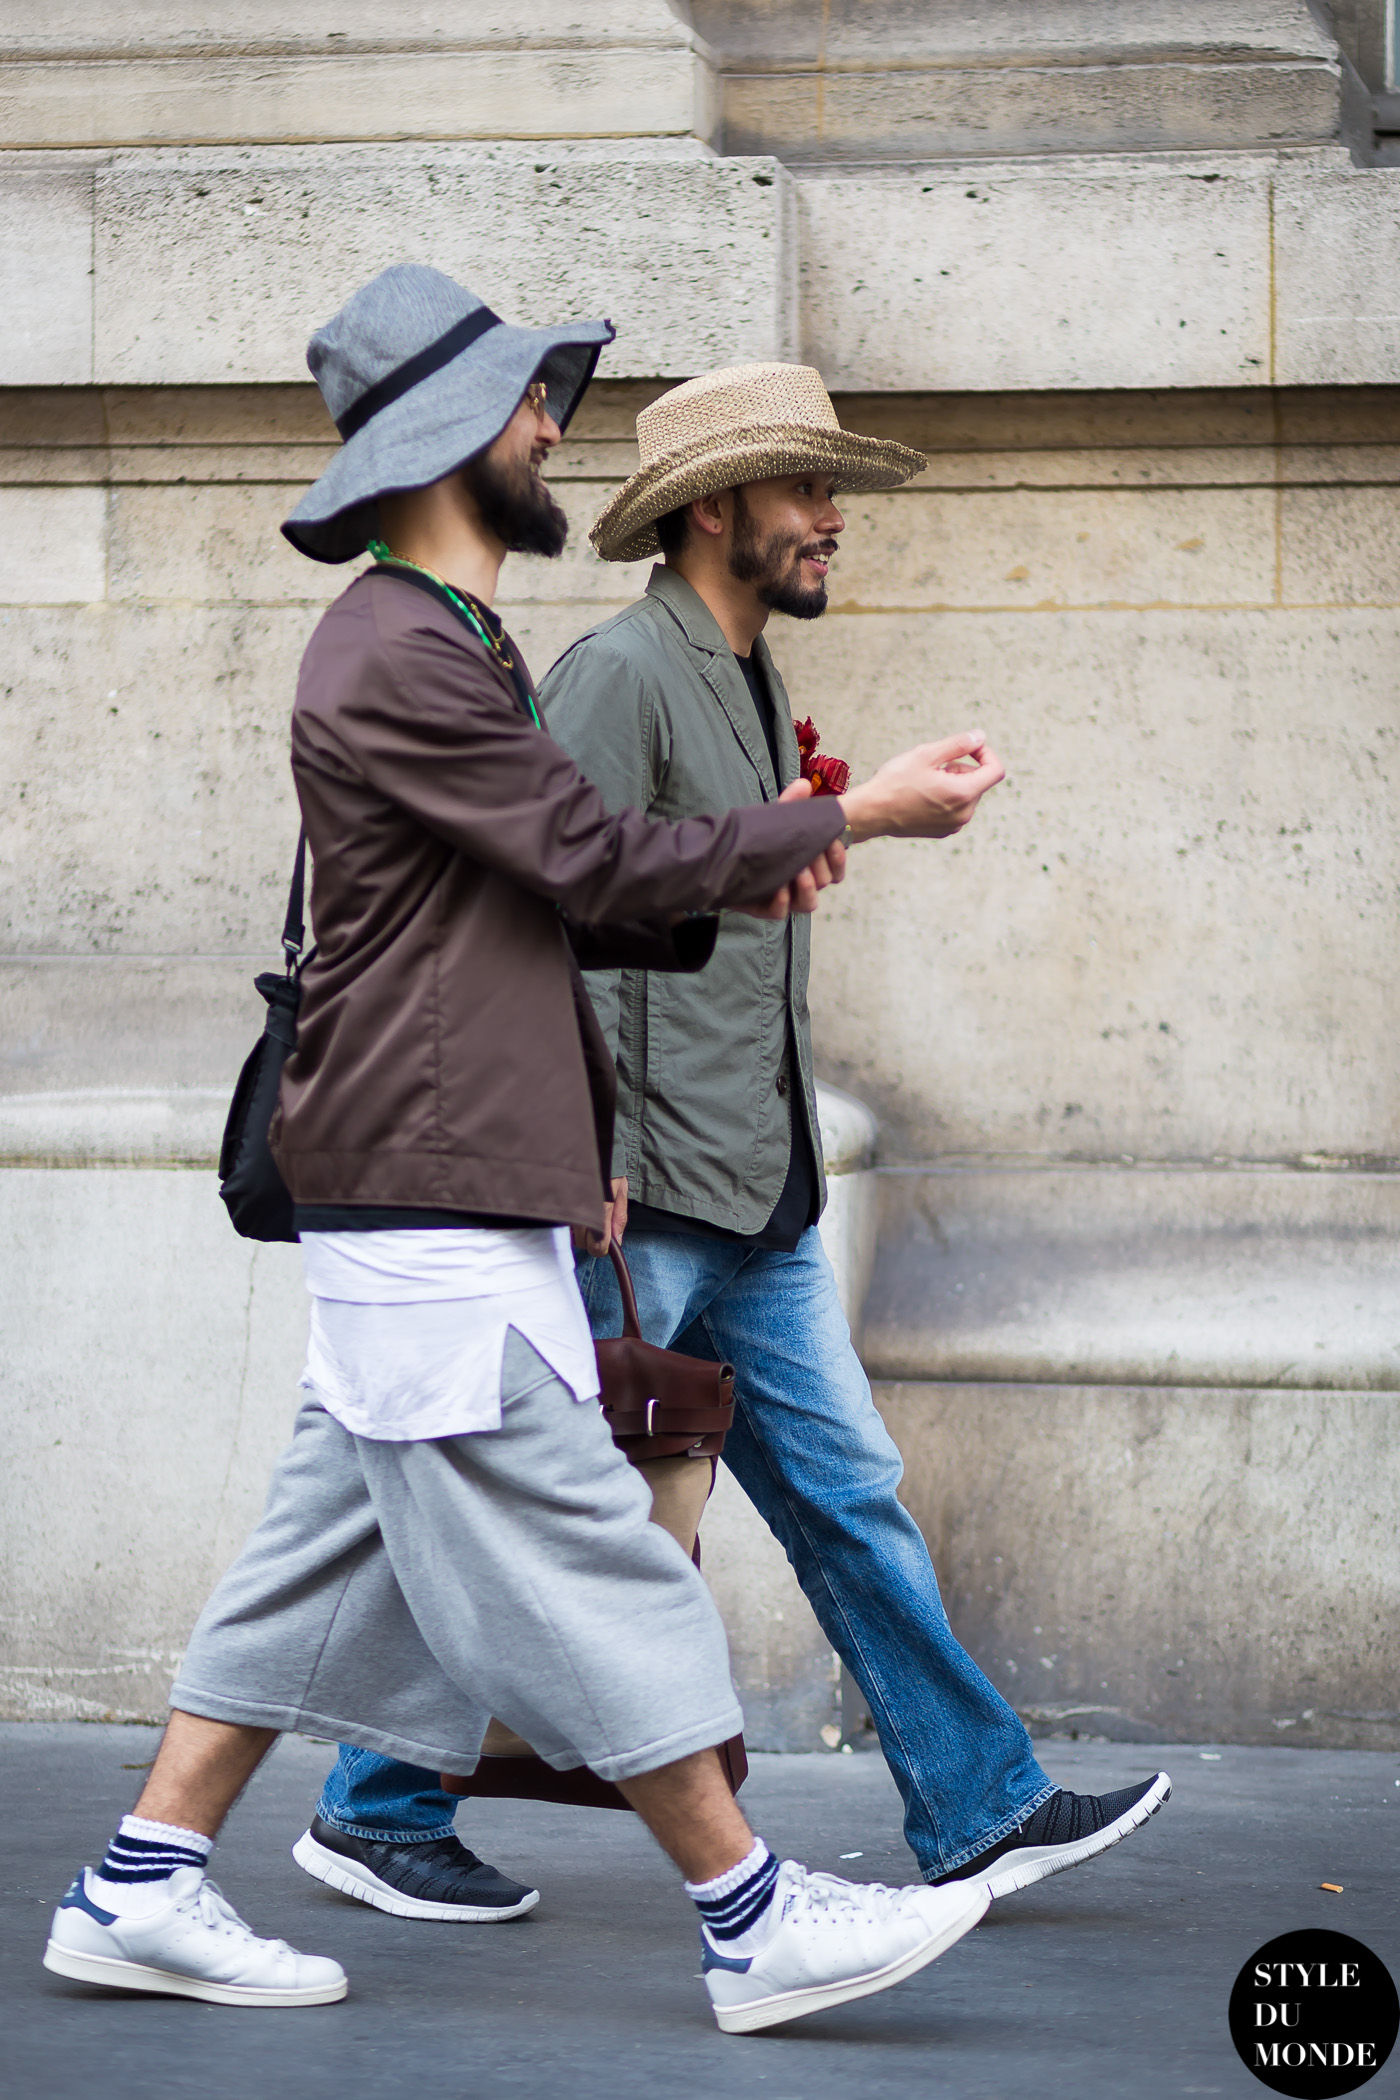 STYLE DU MONDE  Mens hats fashion, Mens street style, Most stylish men